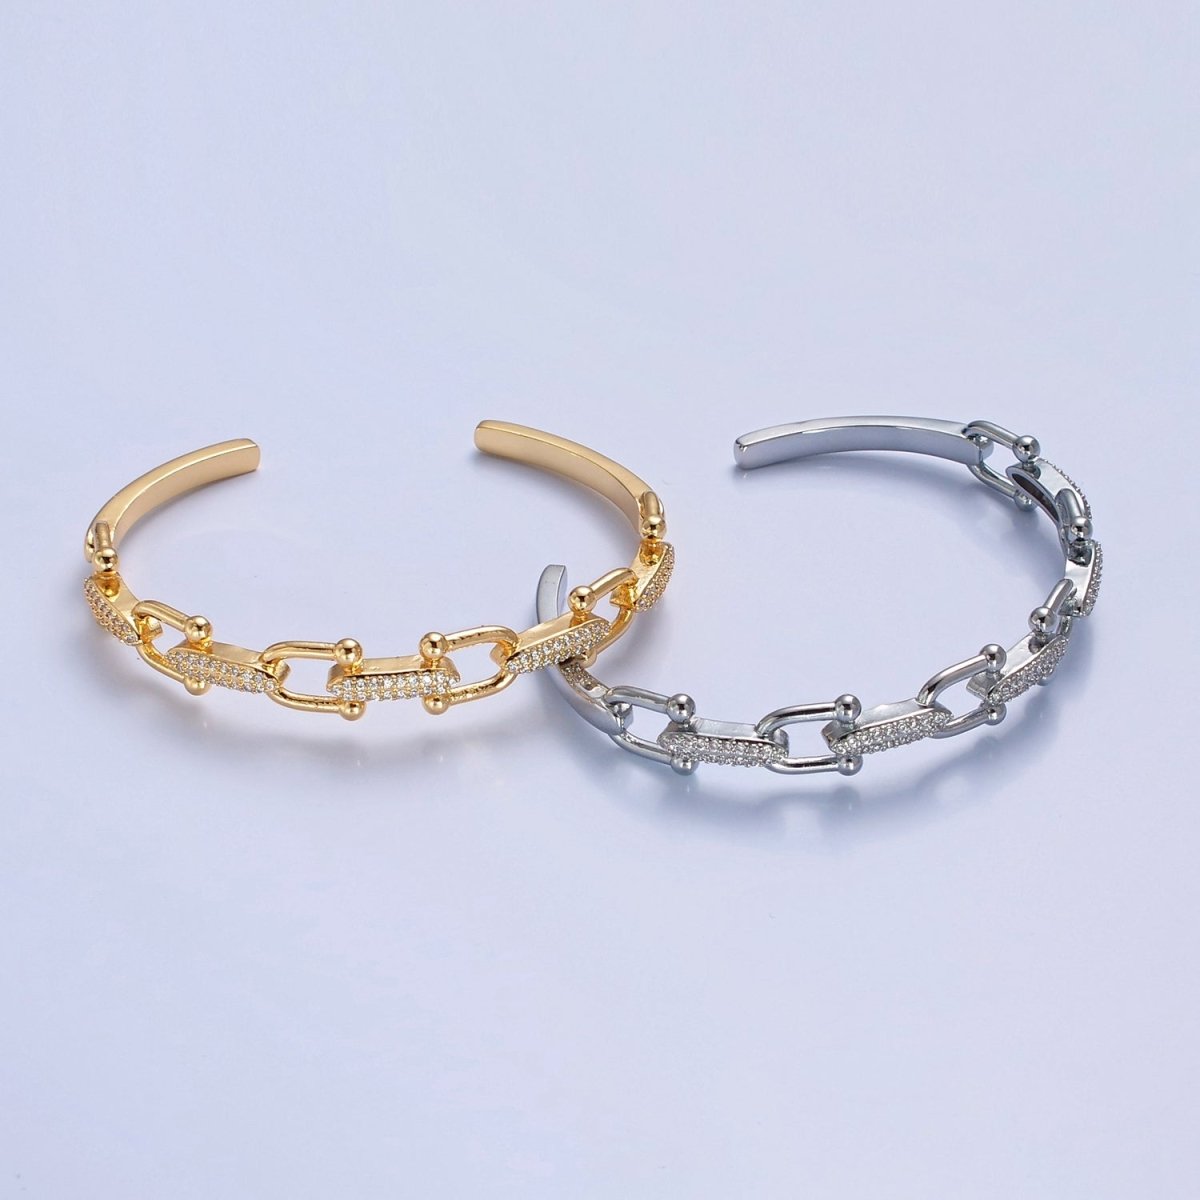 Gold CZ Bangle Bracelet Ball link chain Beaded CZ link Cuff Bracelet | WA-973 WA-974 Clearance Pricing - DLUXCA